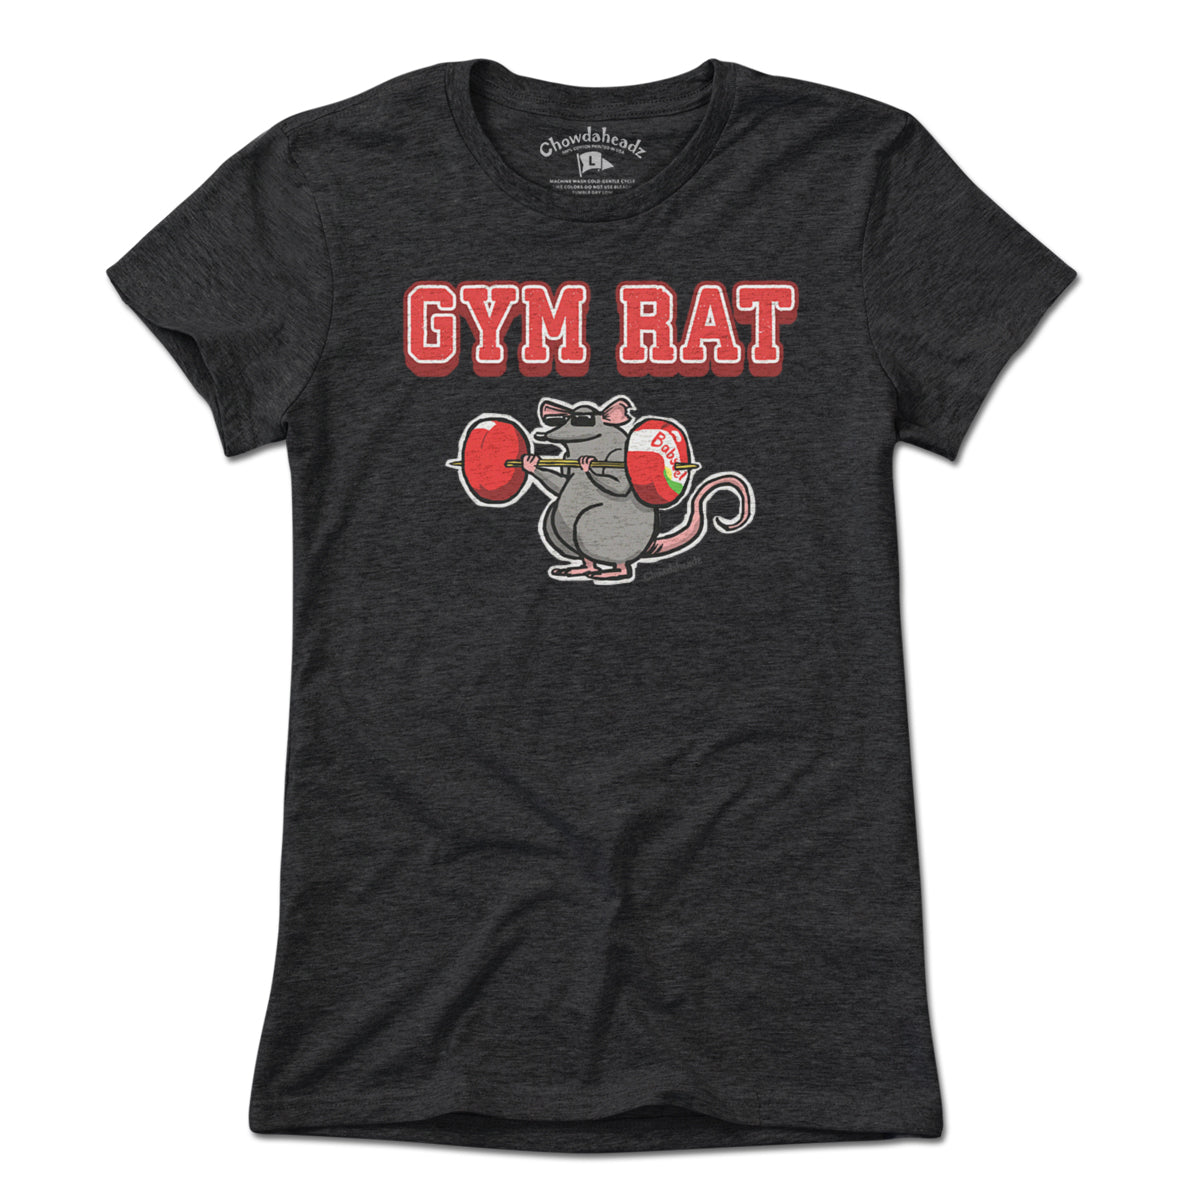 Gym Rat T-Shirt - Chowdaheadz